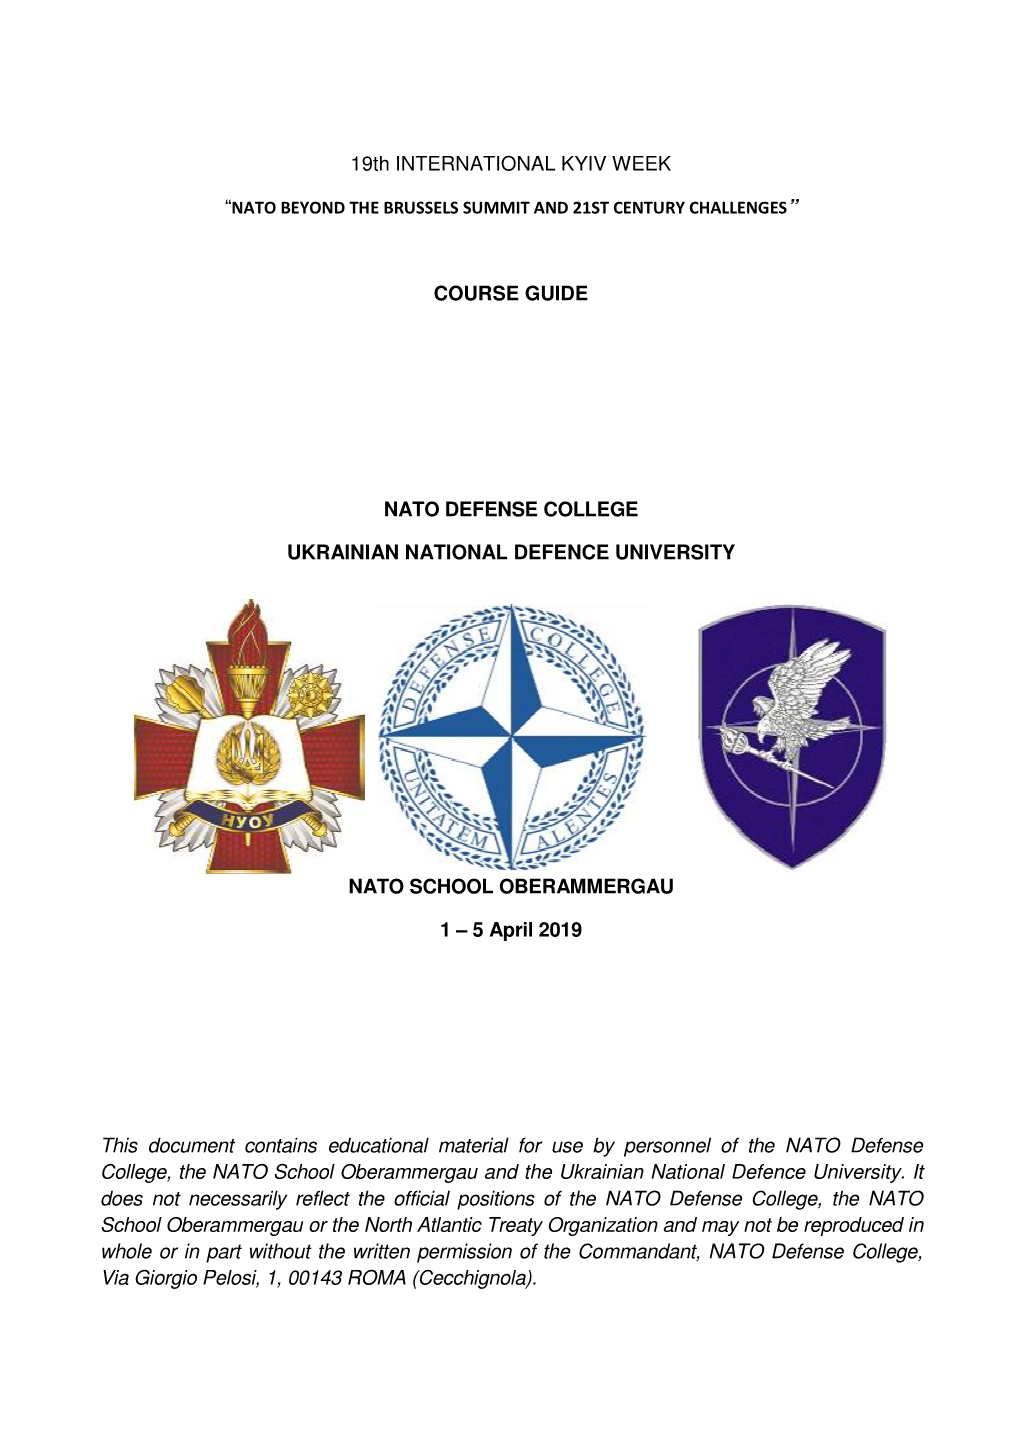 19Th INTERNATIONAL KYIV WEEK COURSE GUIDE NATO DEFENSE